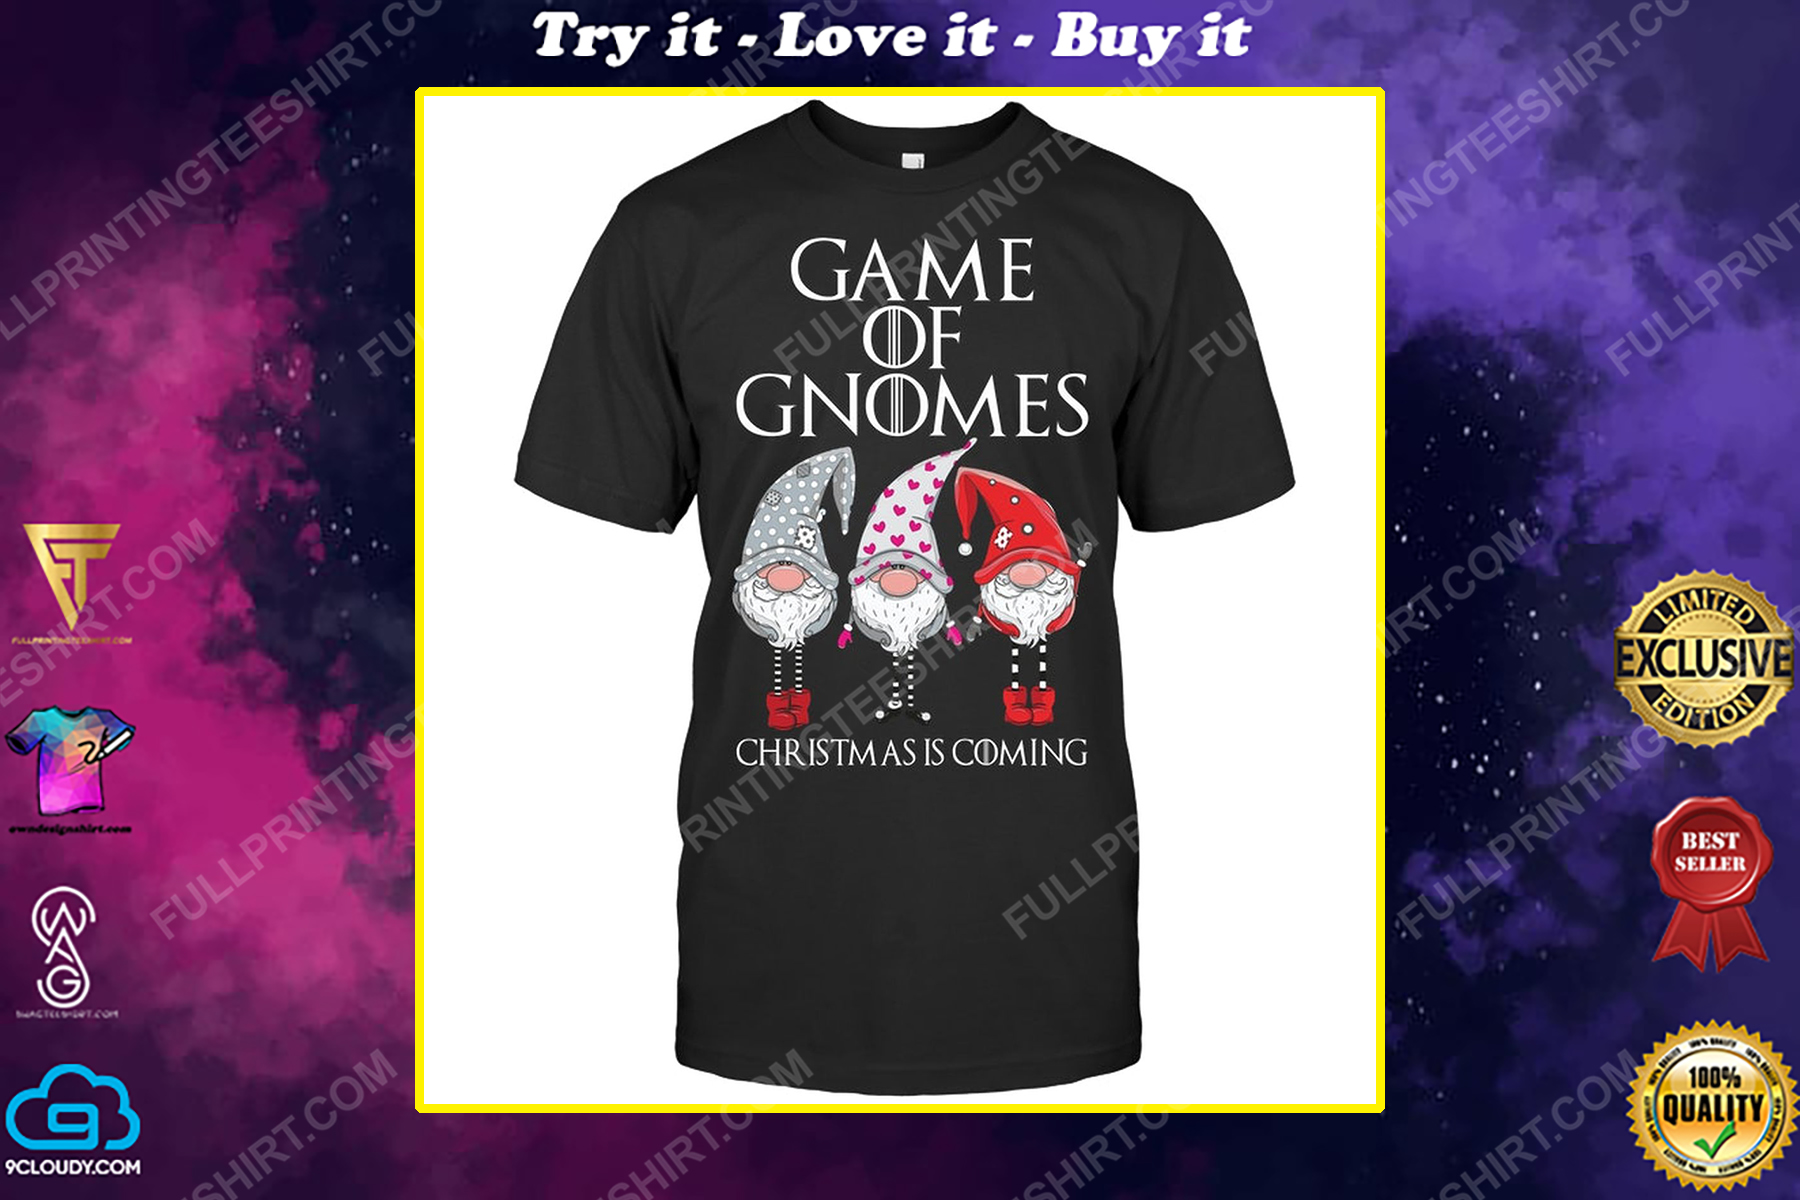 Game of gnomes christmas is coming shirt